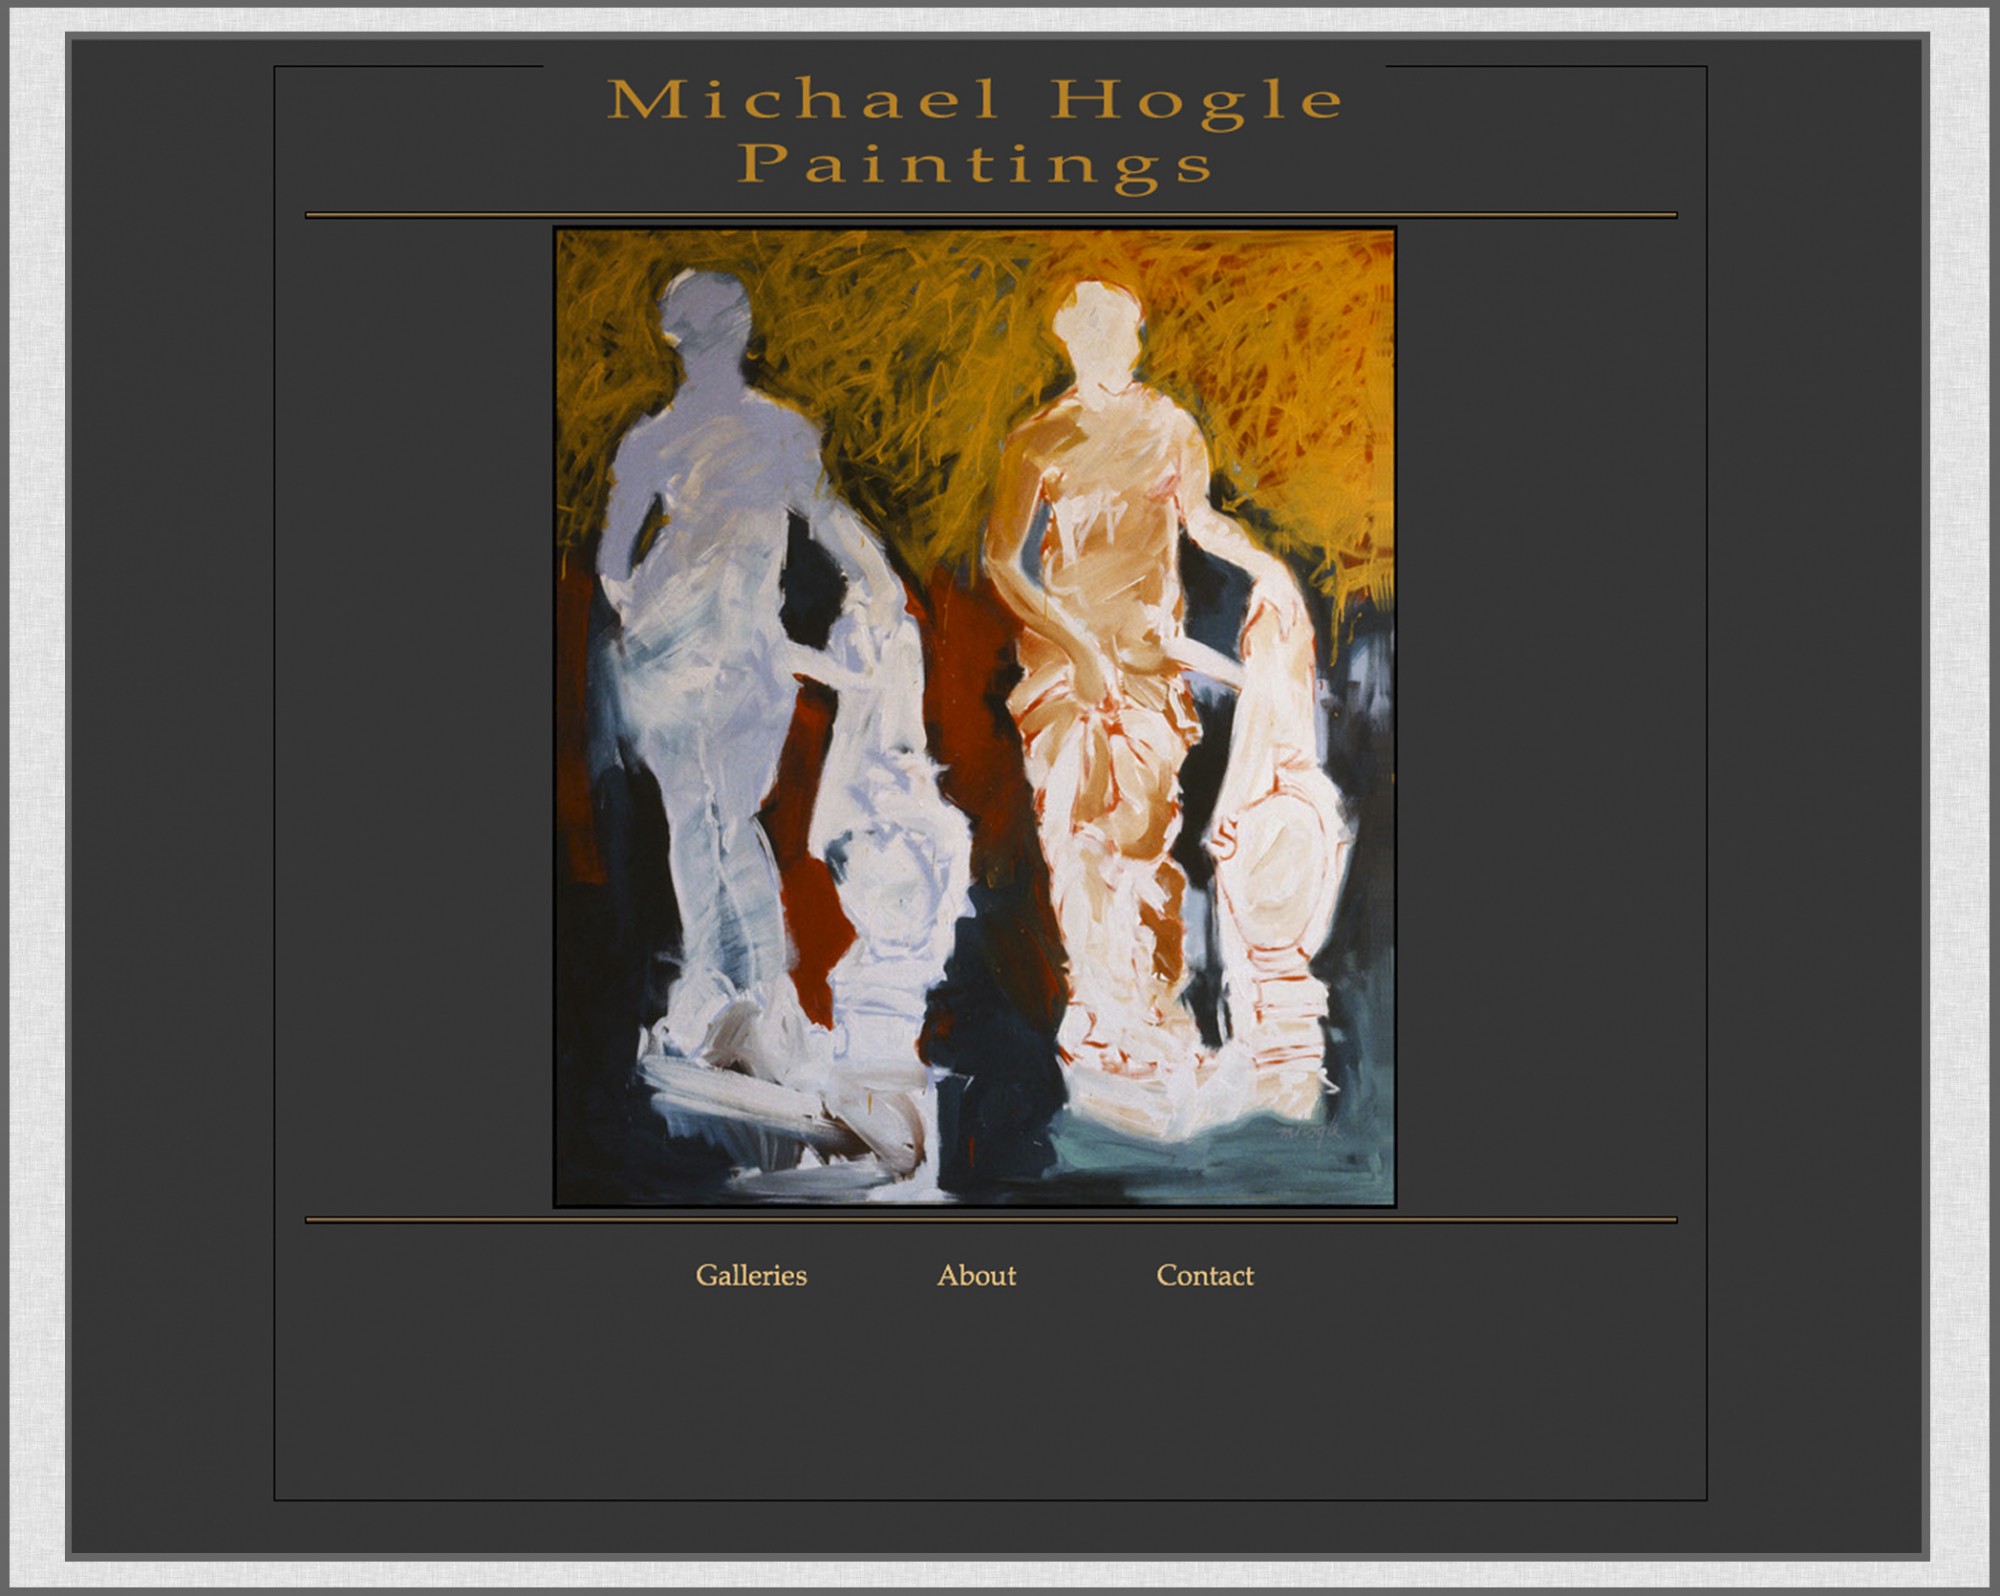 home page of michaelhogle.com